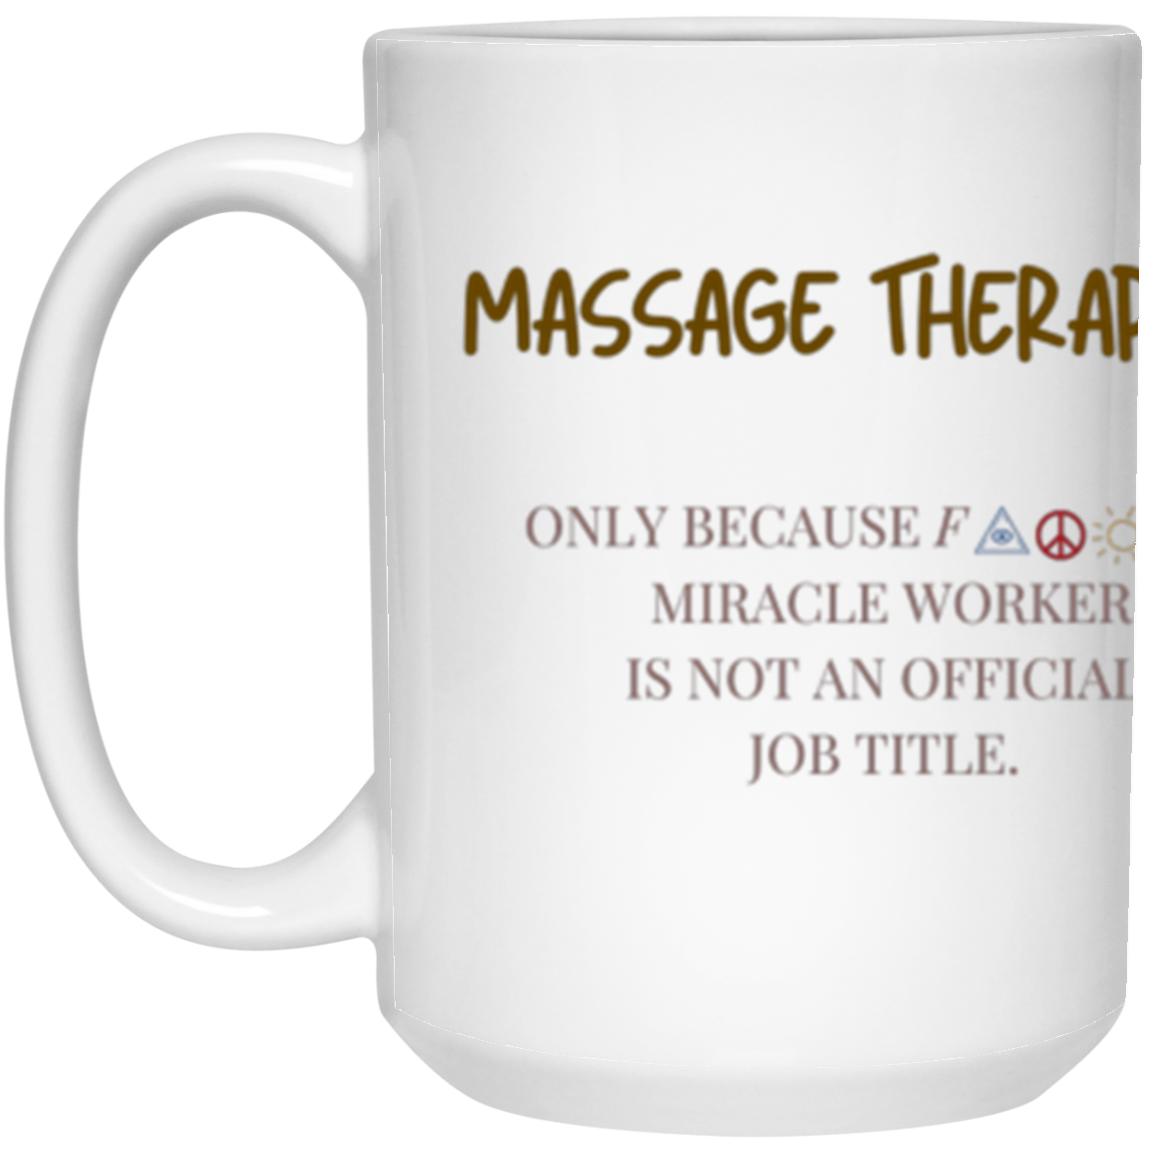 Massage Therapist 15 oz. White Mug Gifts Wrap Around text